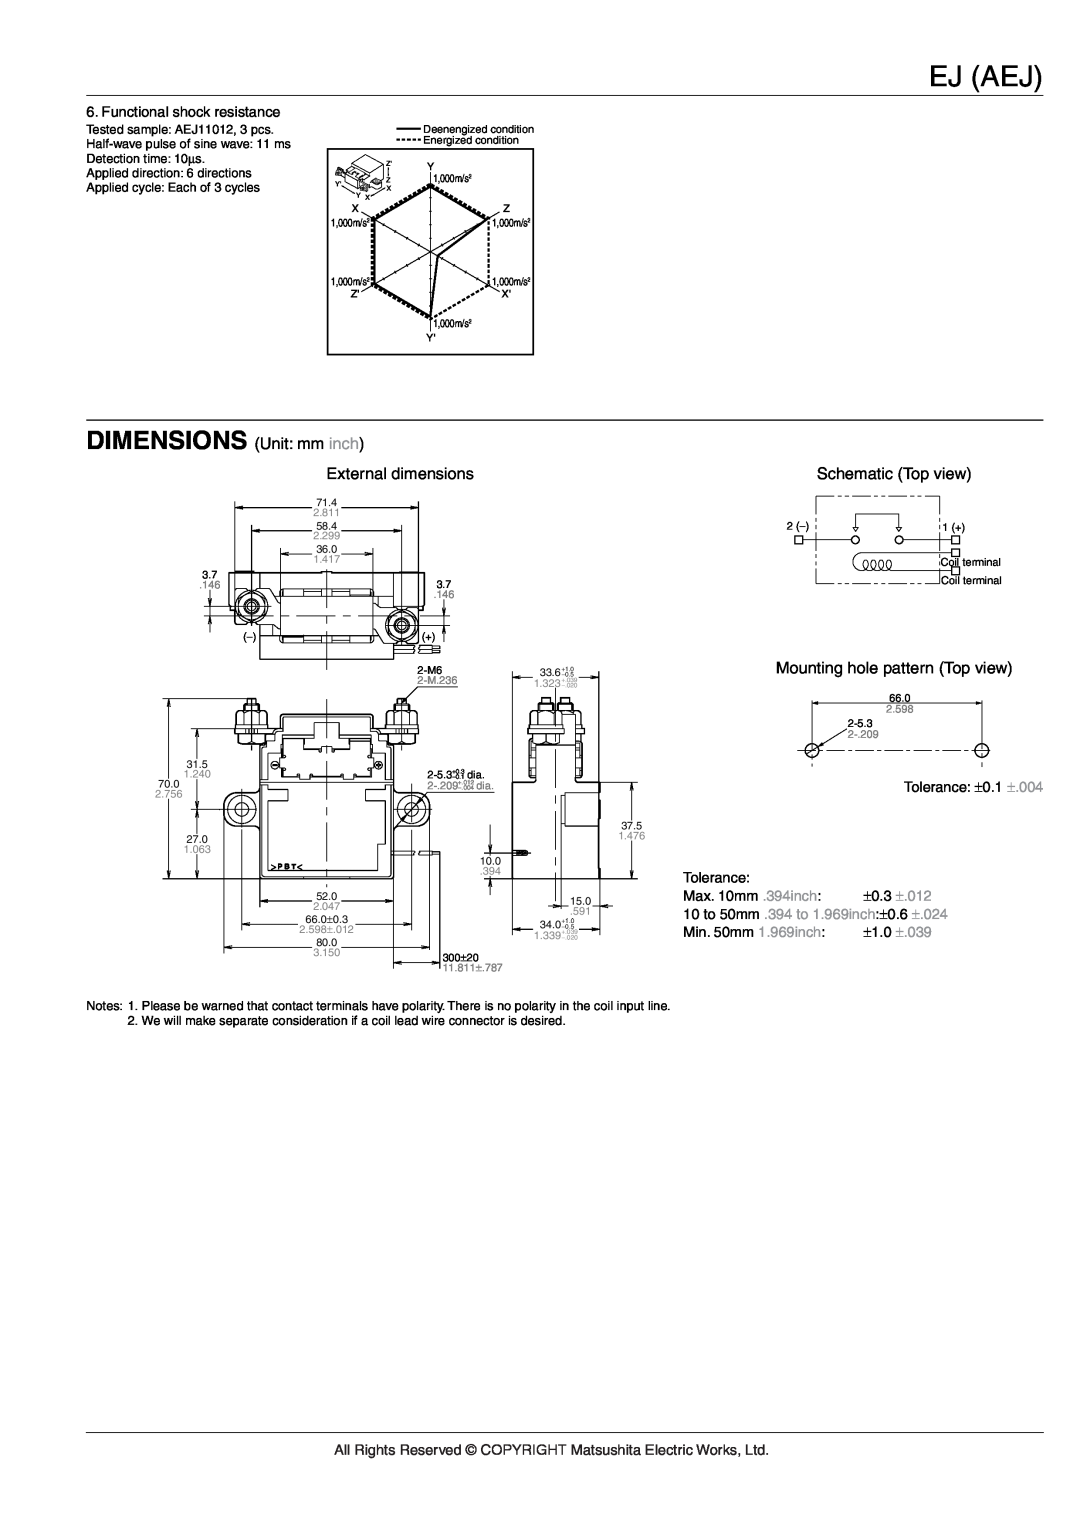 Panasonic EJ Relays manual DIMENSIONS Unit mm inch, Ej Aej, Functional shock resistance, Mounting hole pattern Top view 